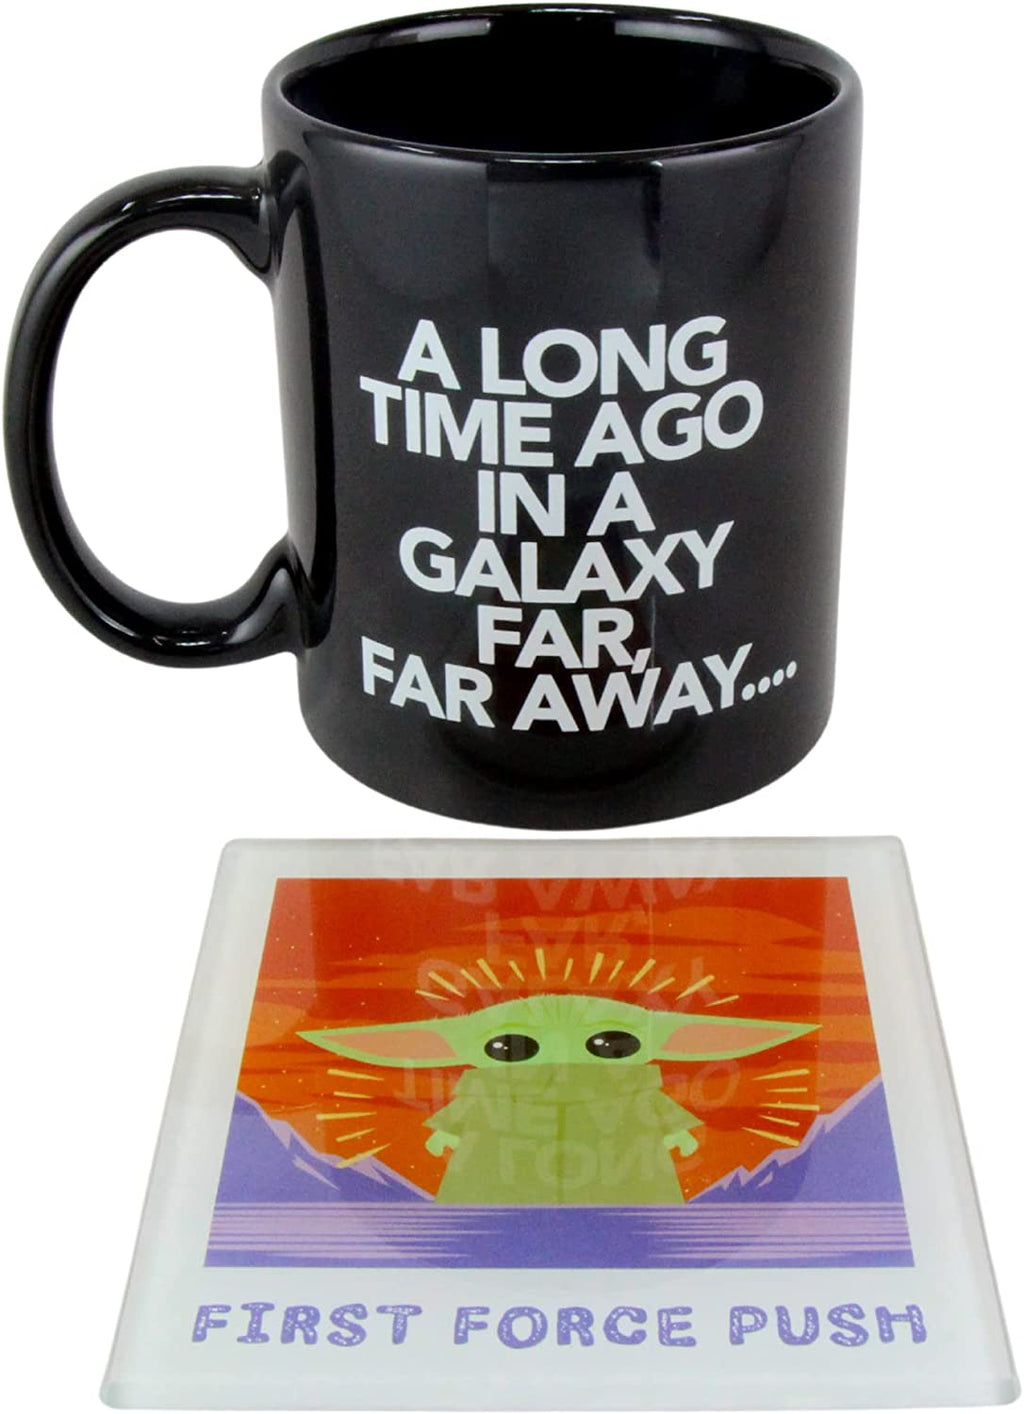 Star Wars The Mandalorian: Grogu/Baby Yoda 20oz Ceramic Camper Mug